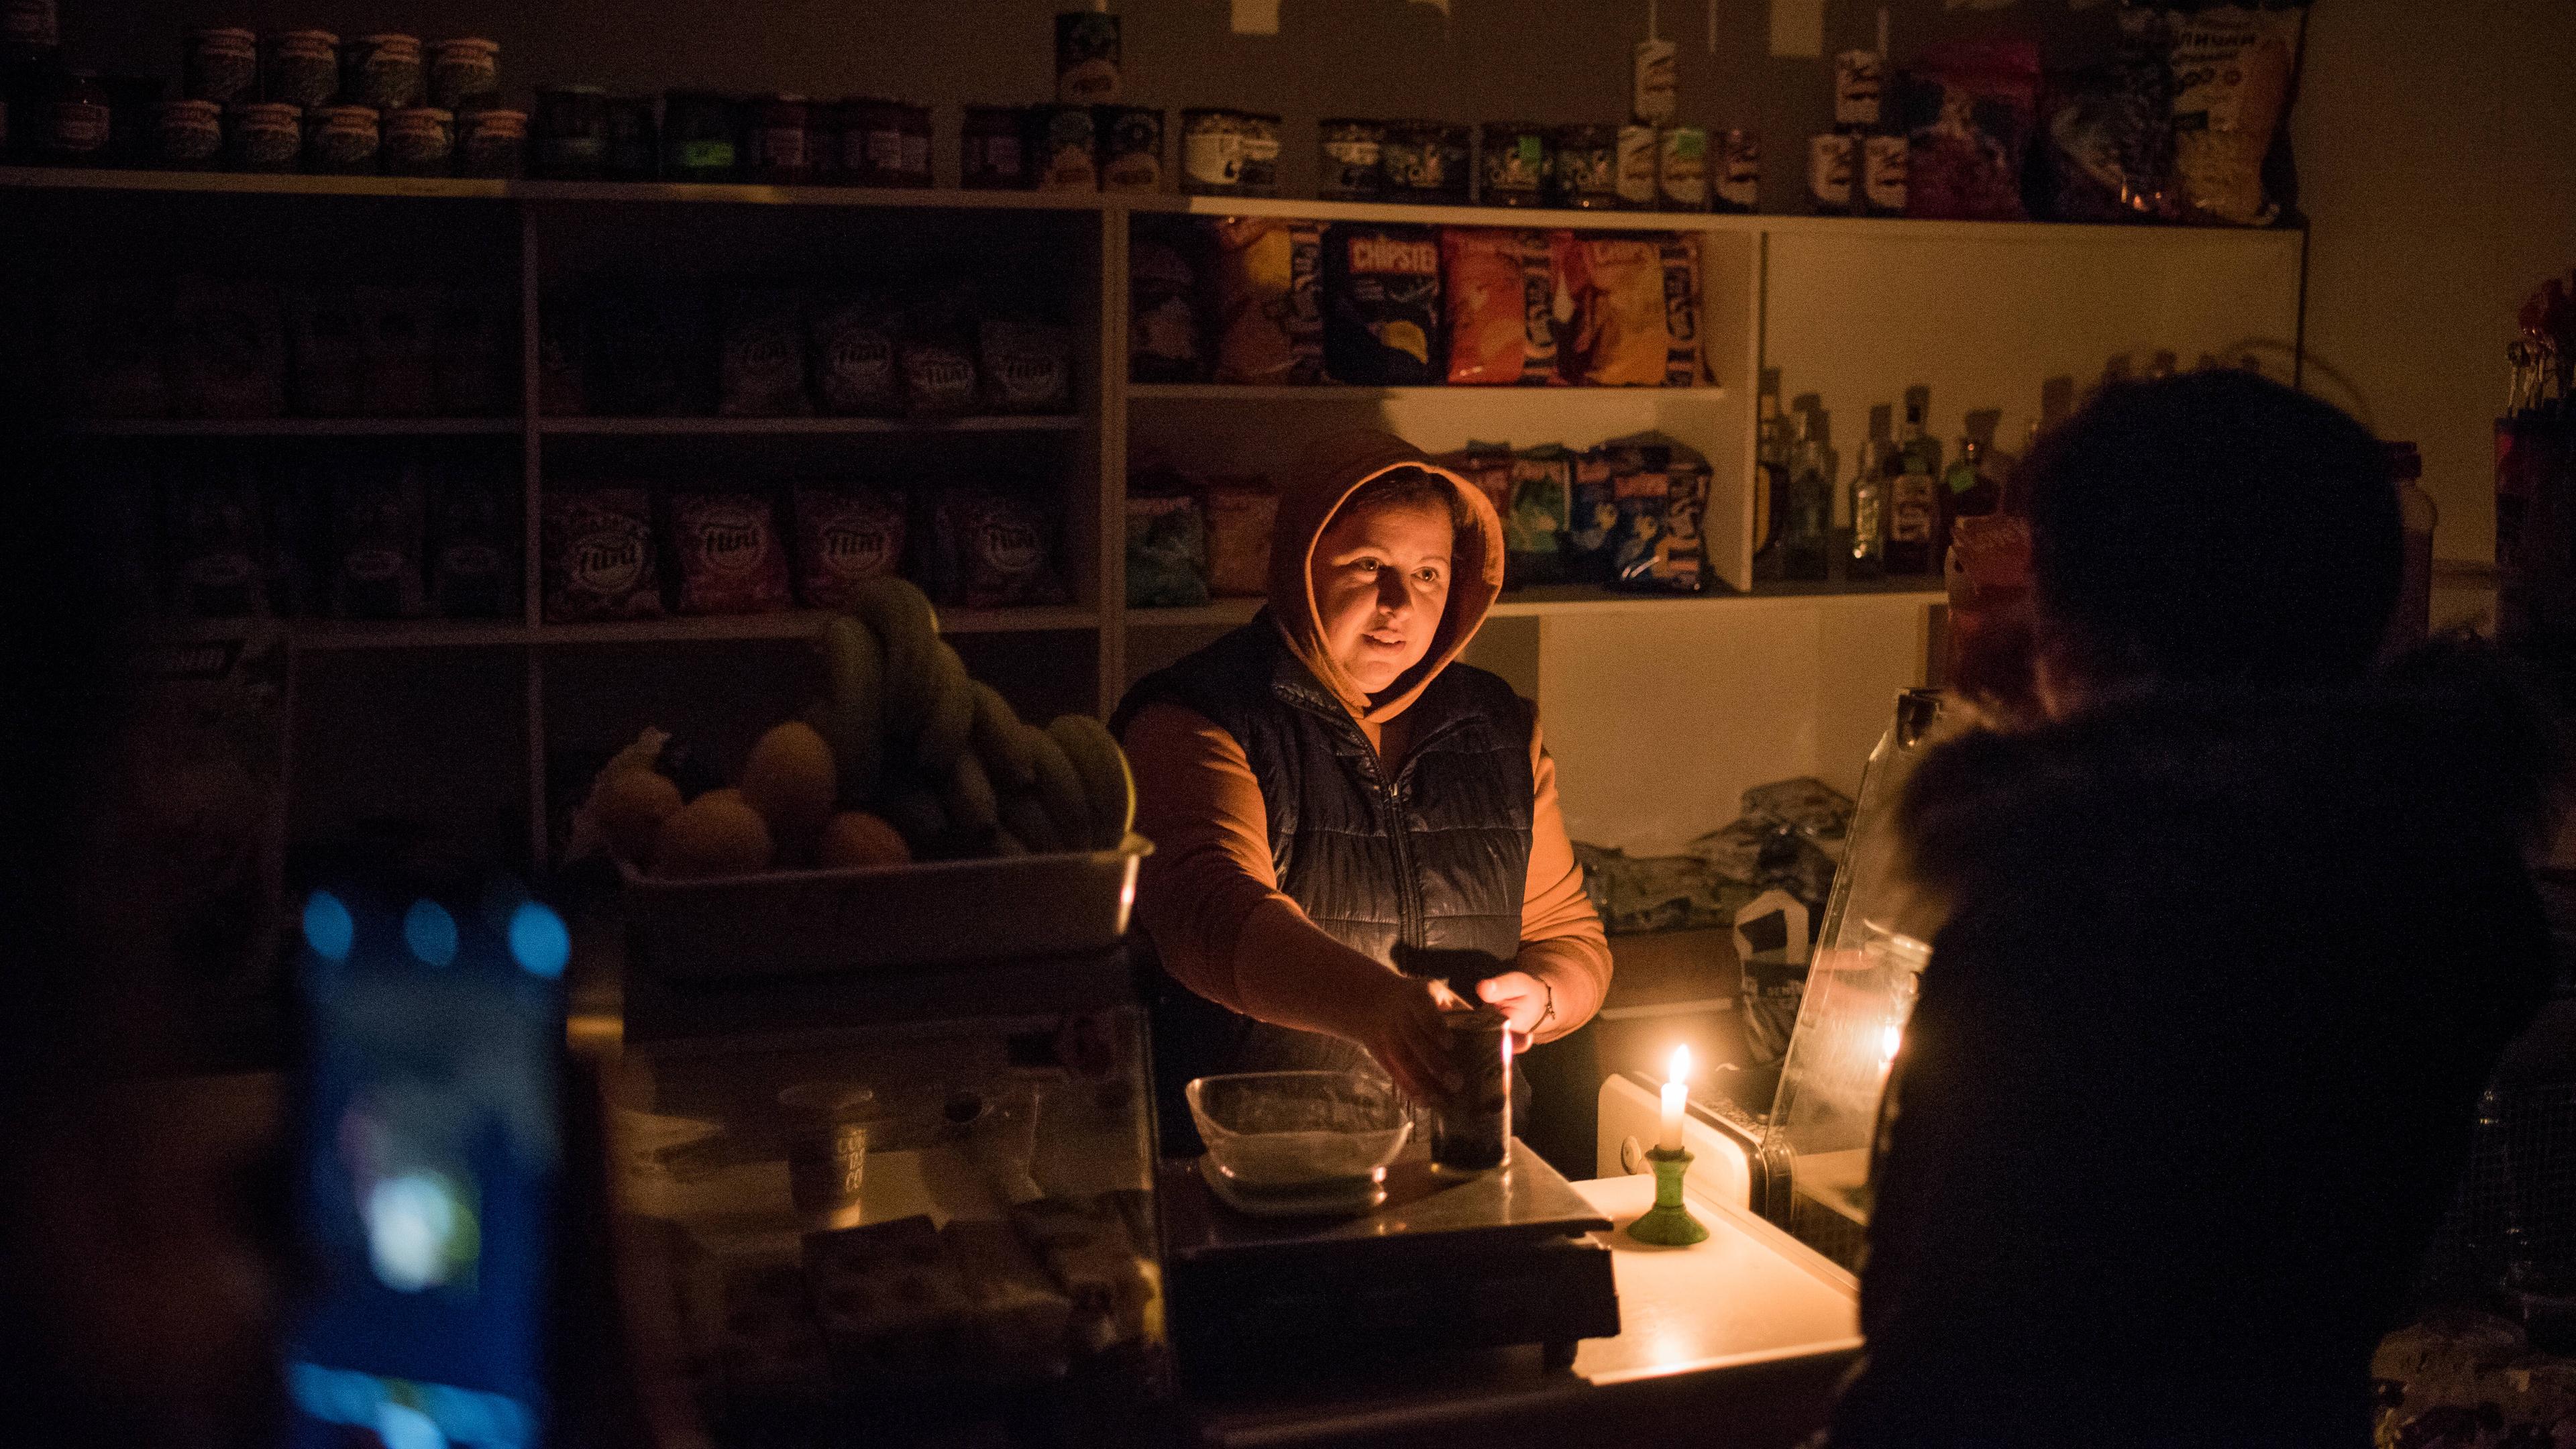 Lebensmittelhändler bedient Kunden bei Kerzenlicht